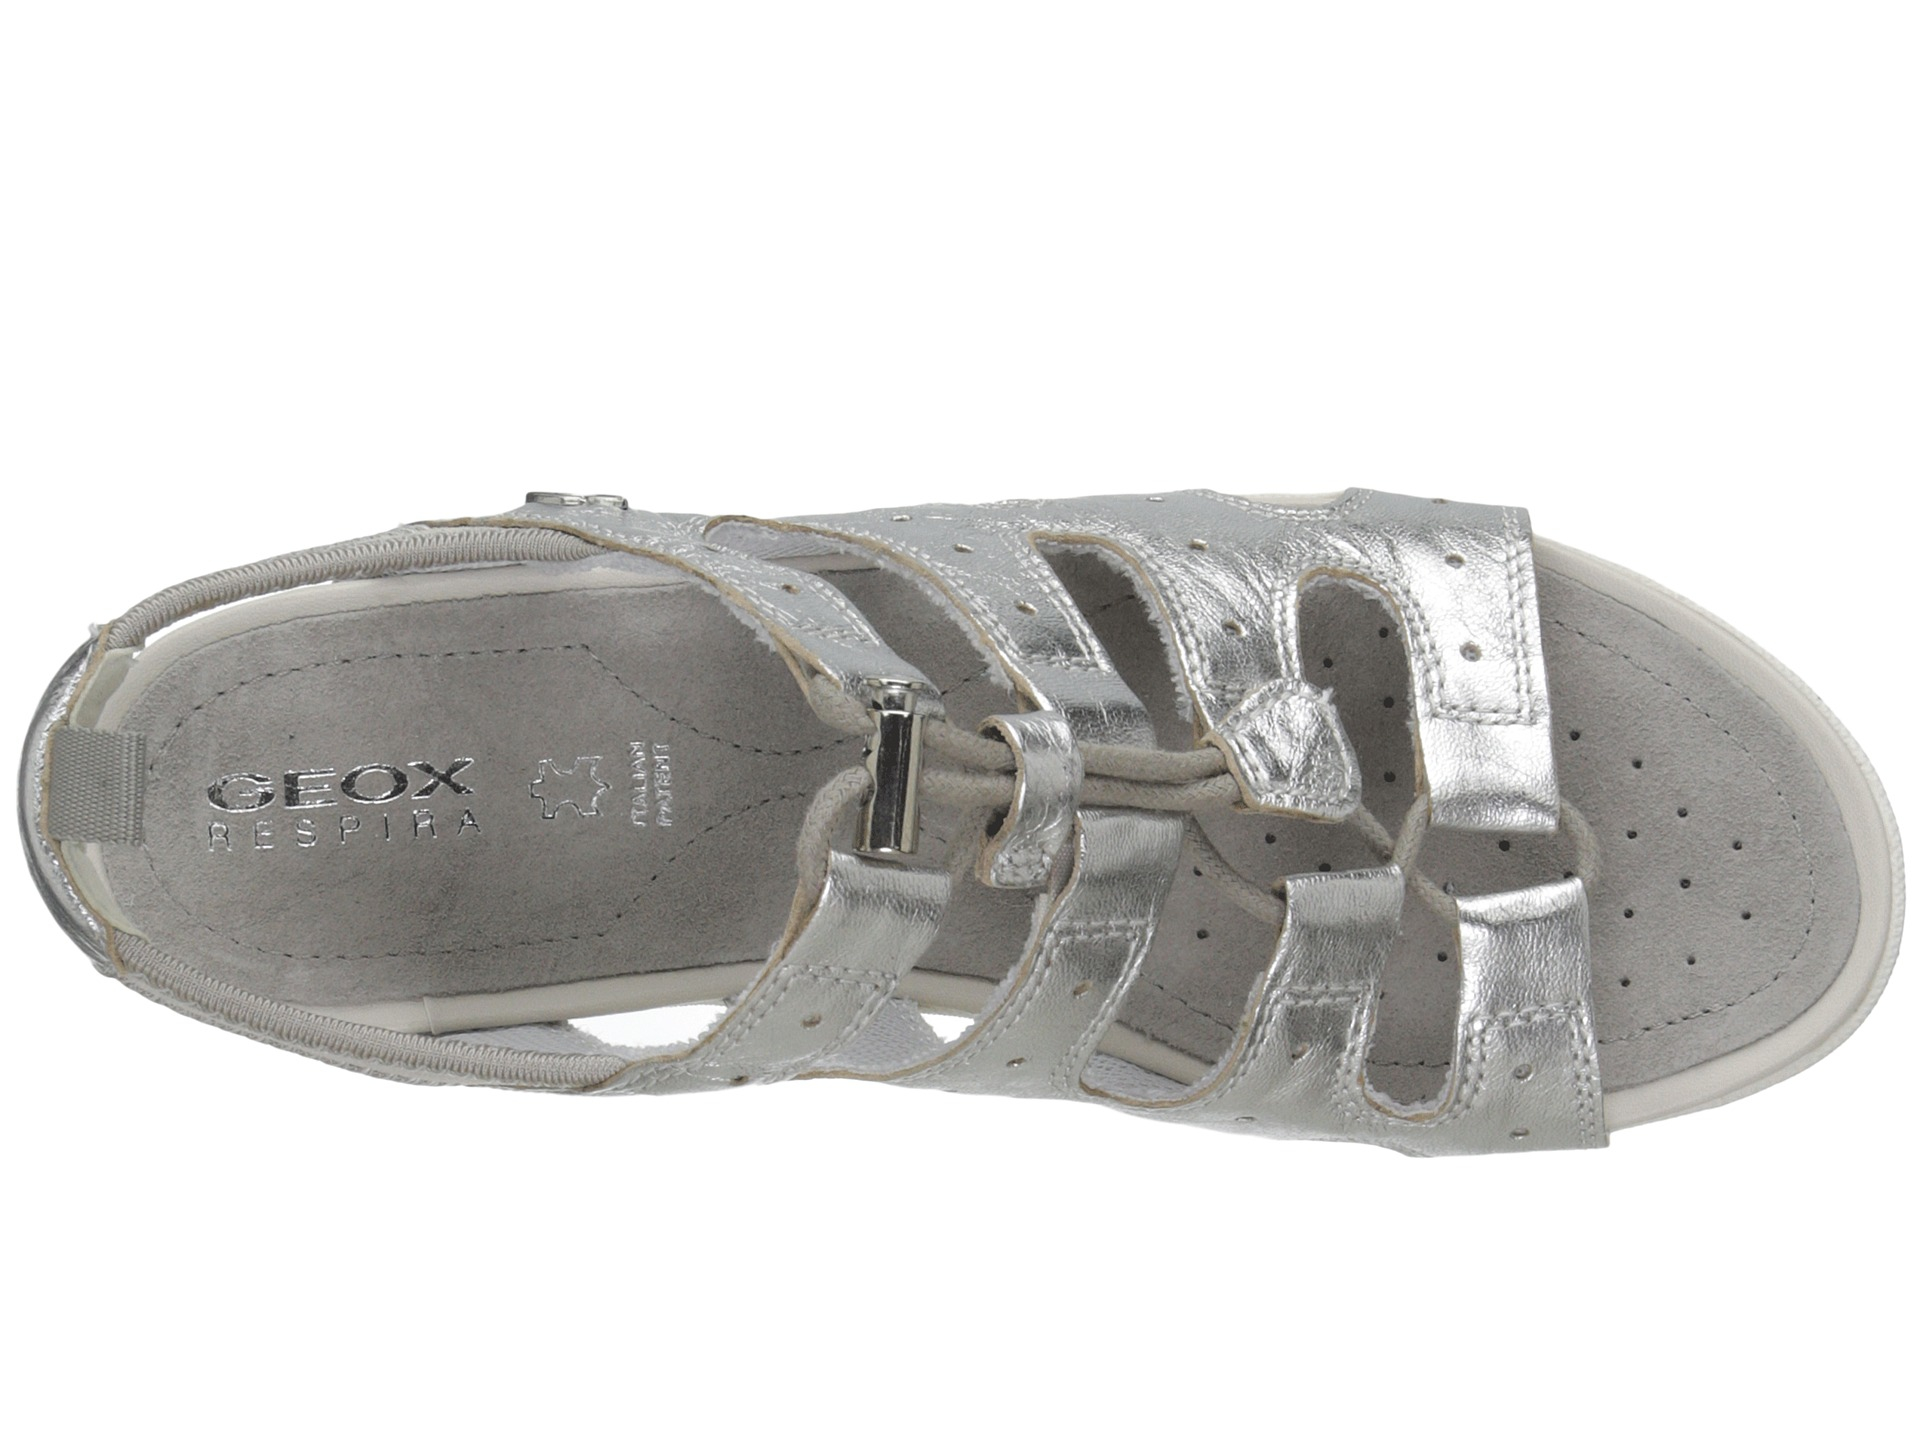 Geox Leather D Sandal Vega in Silver (Metallic) - Save 48% | Lyst